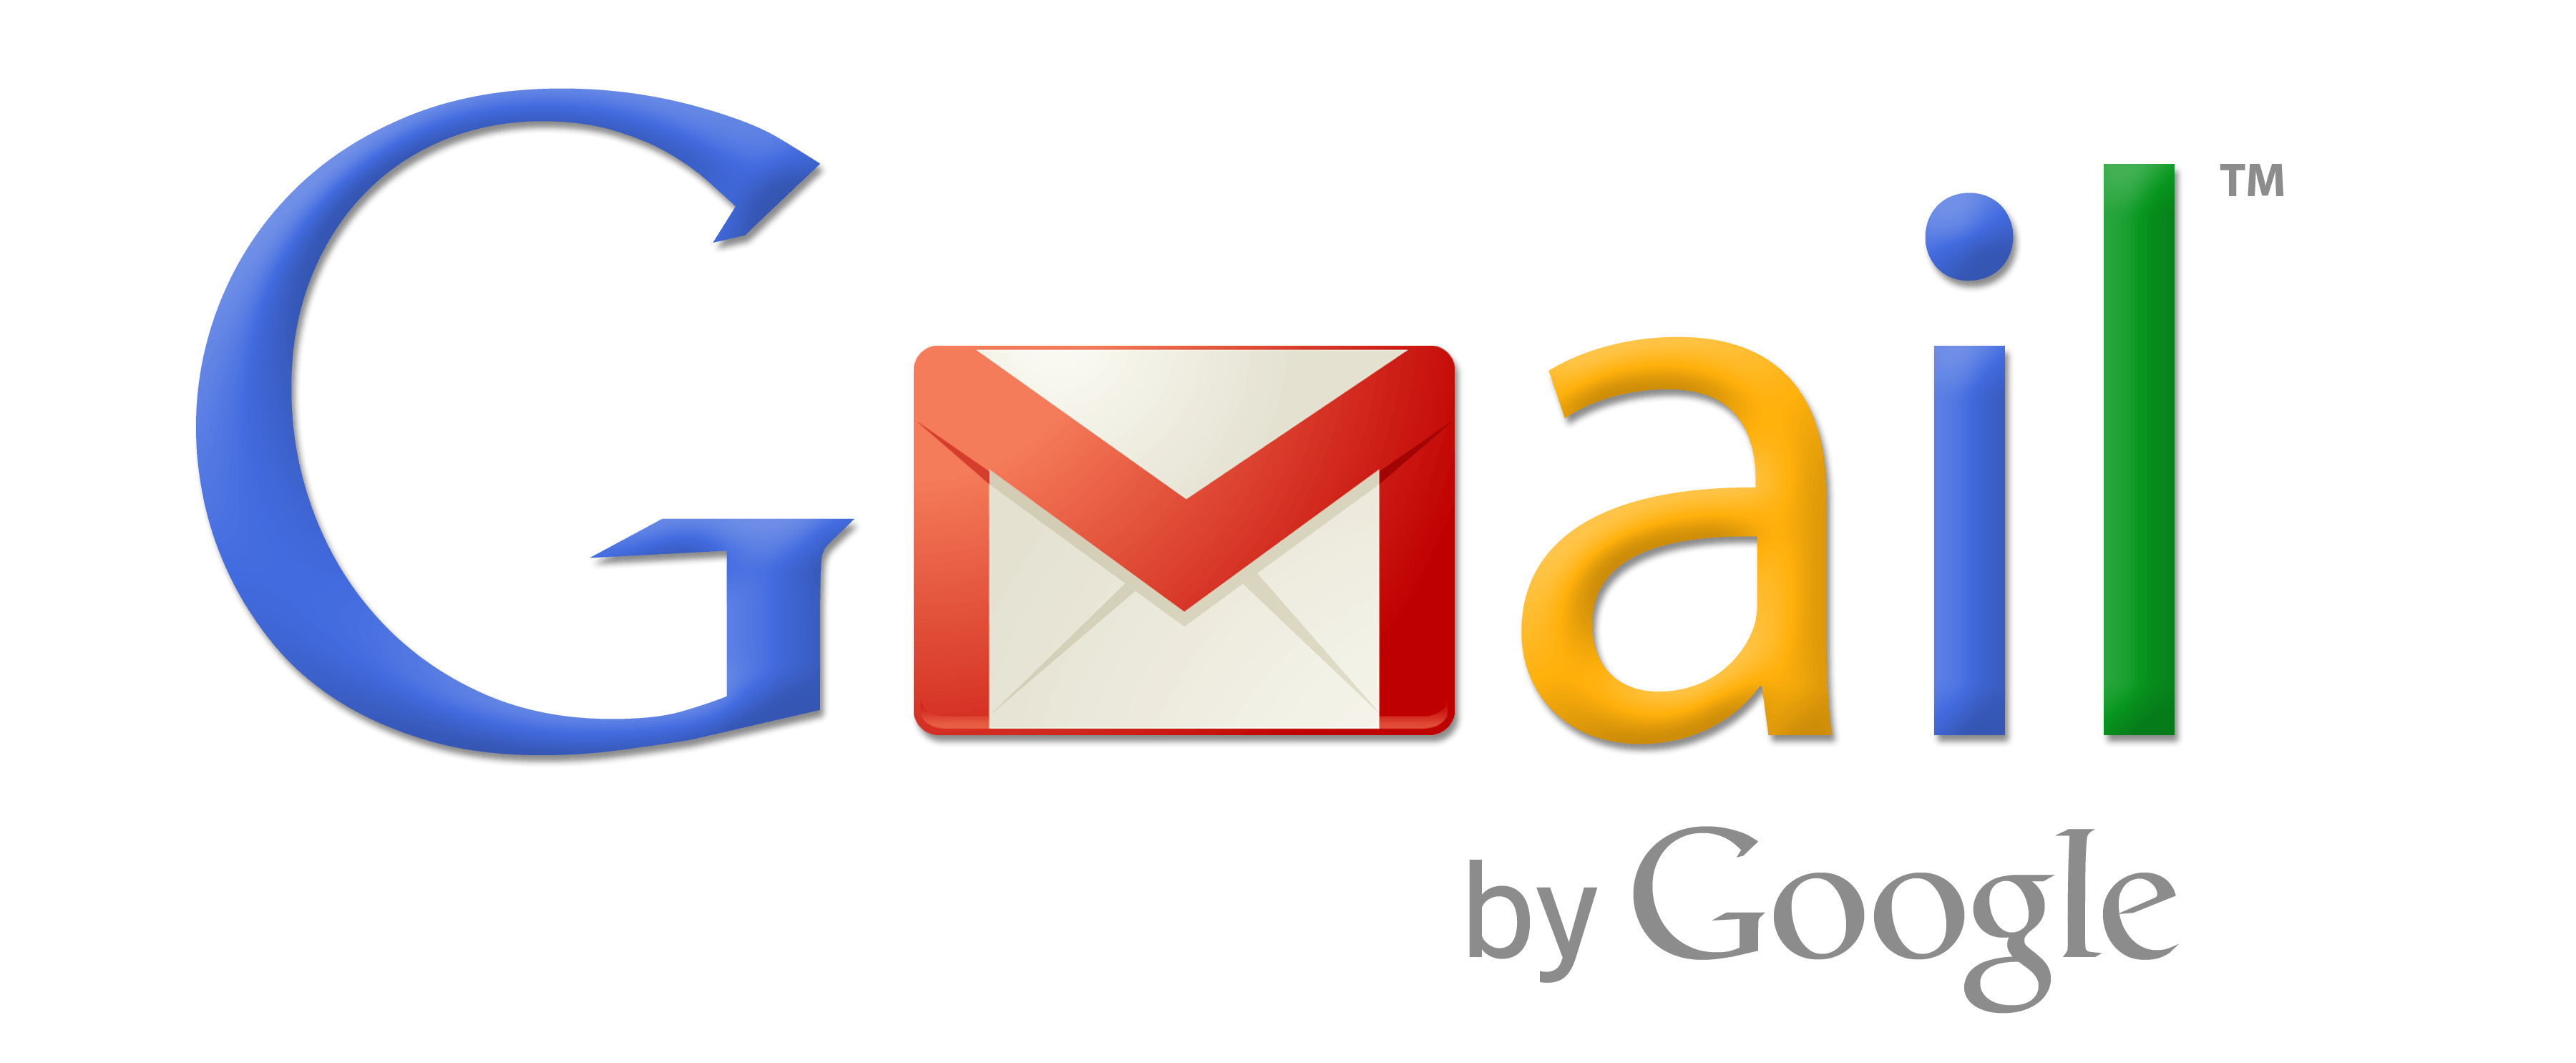 Google Account Logo - File:Gmail logo.png - Wikimedia Commons